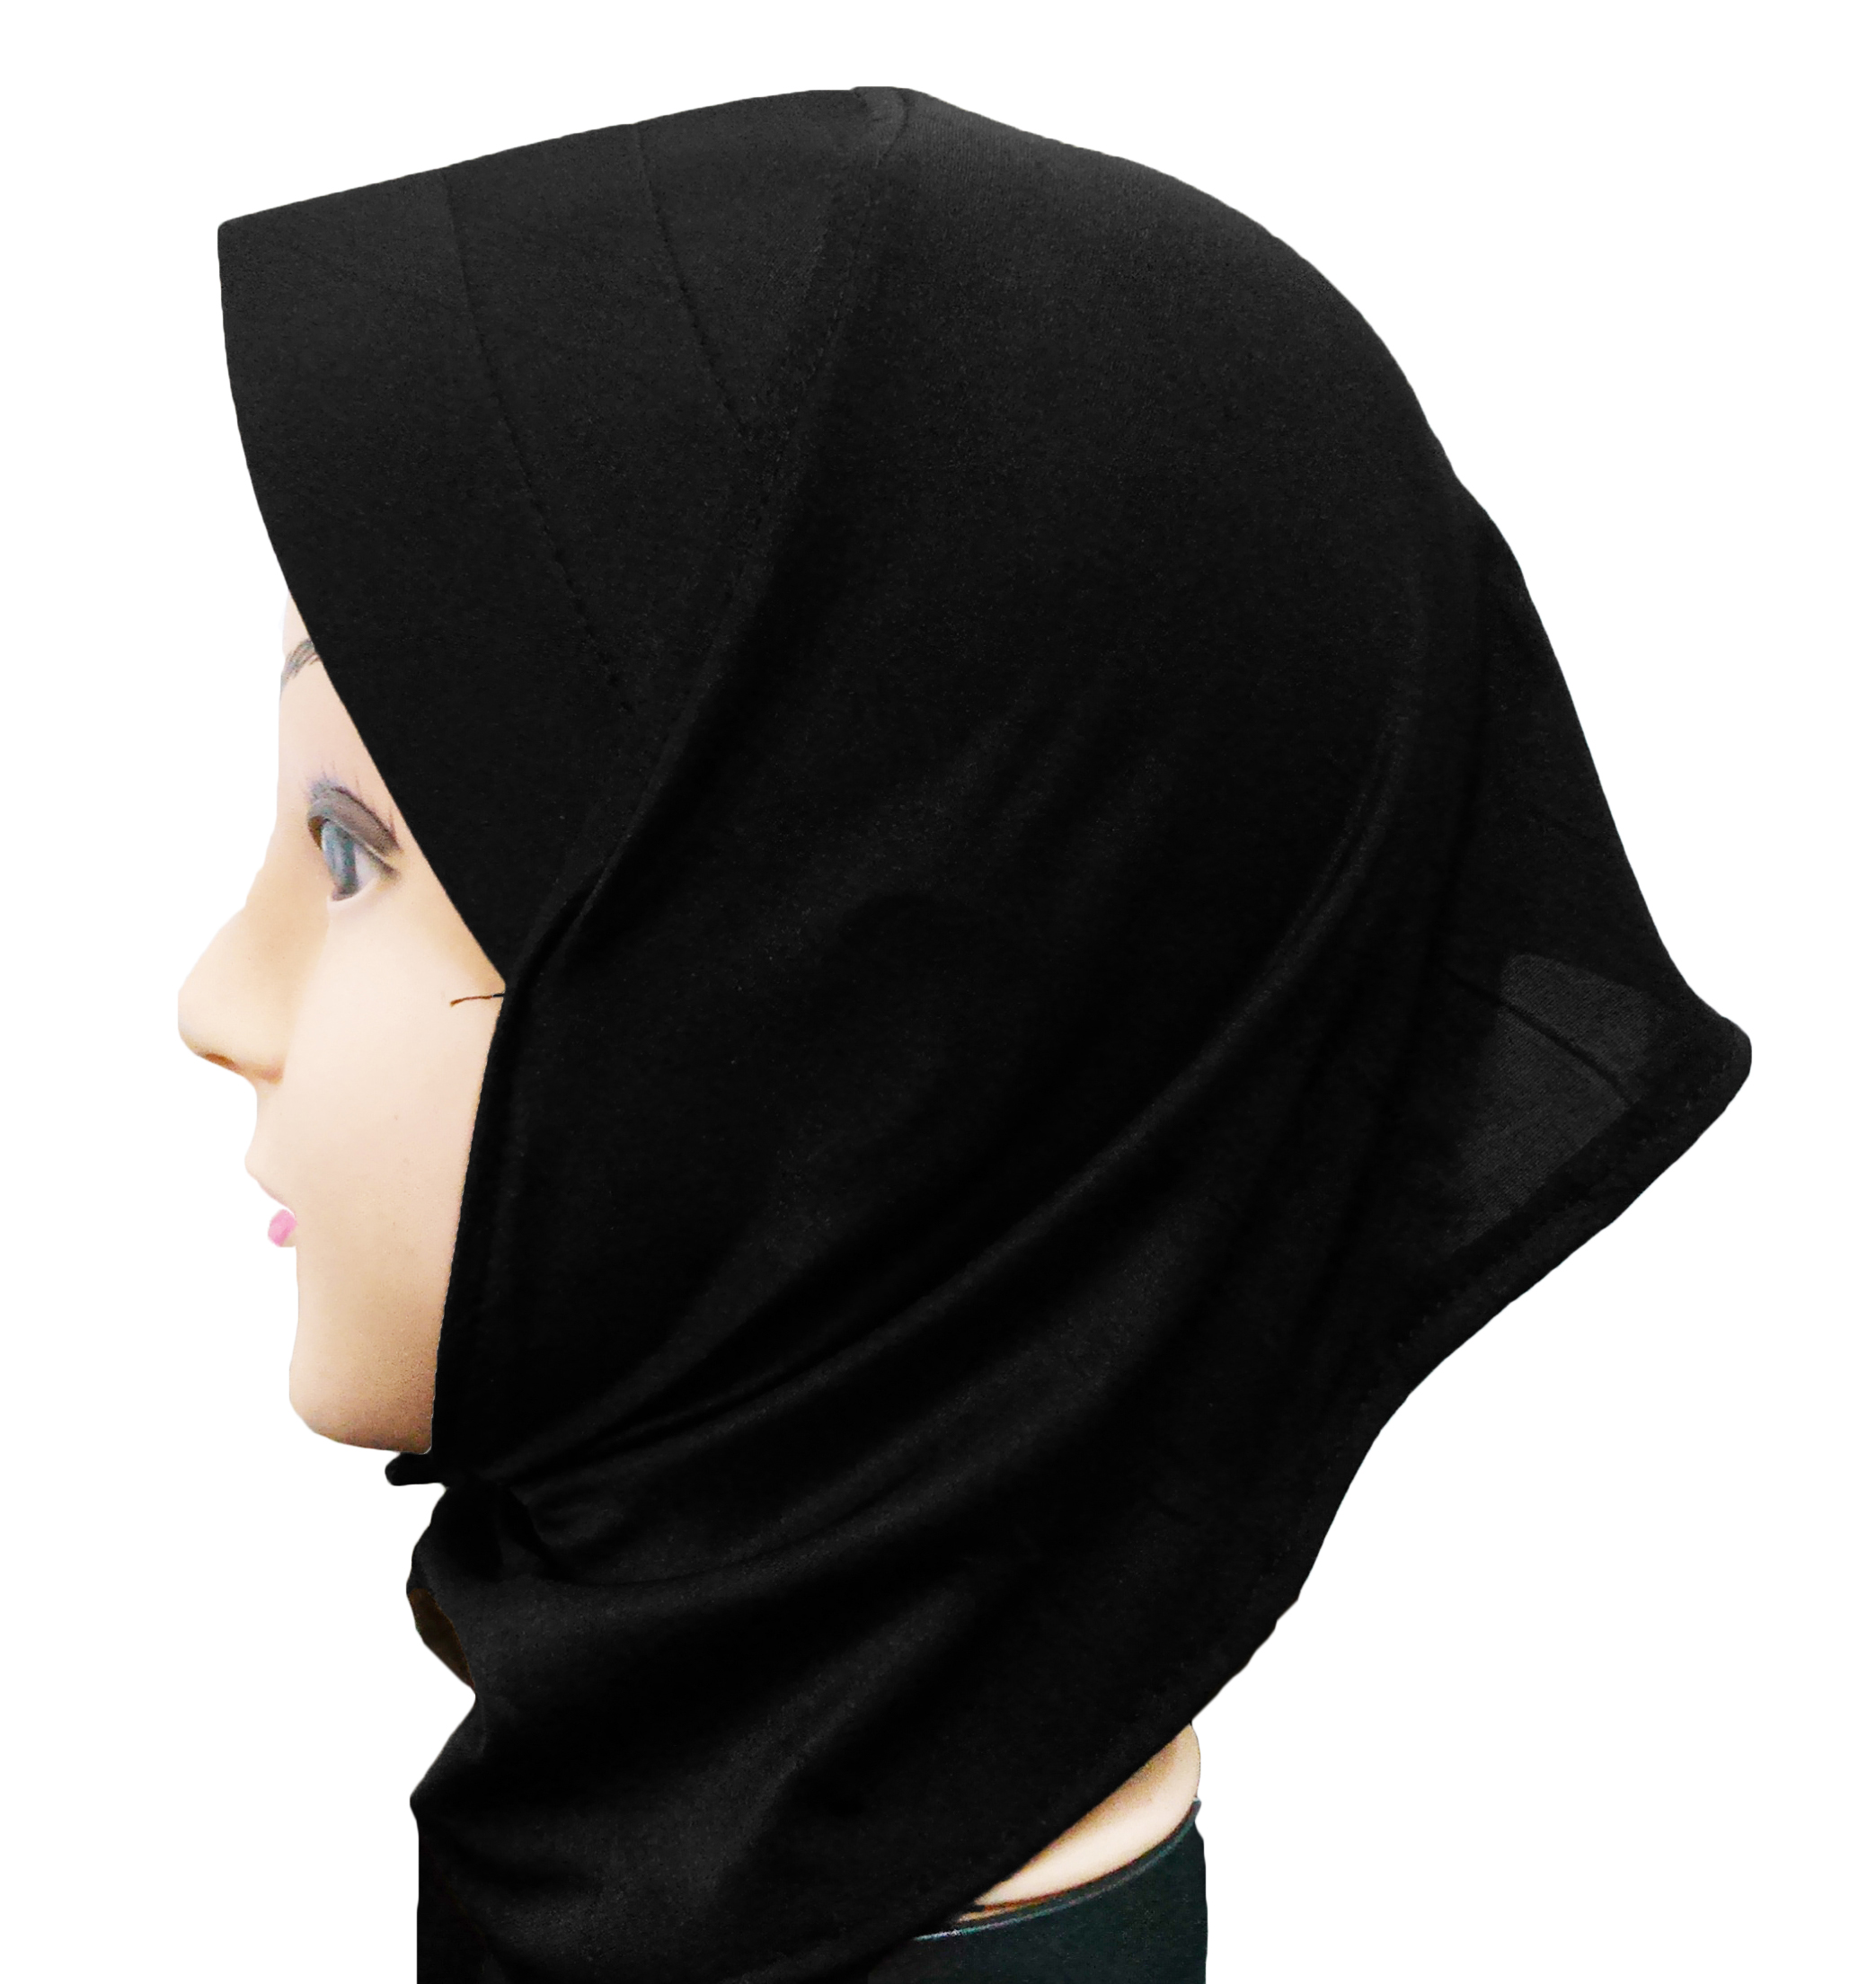 Buy Hijab Ninja Canvas Black Under Scarf Ladies Abaya Head Hair Cover Women Tube Cap Burqa Stole